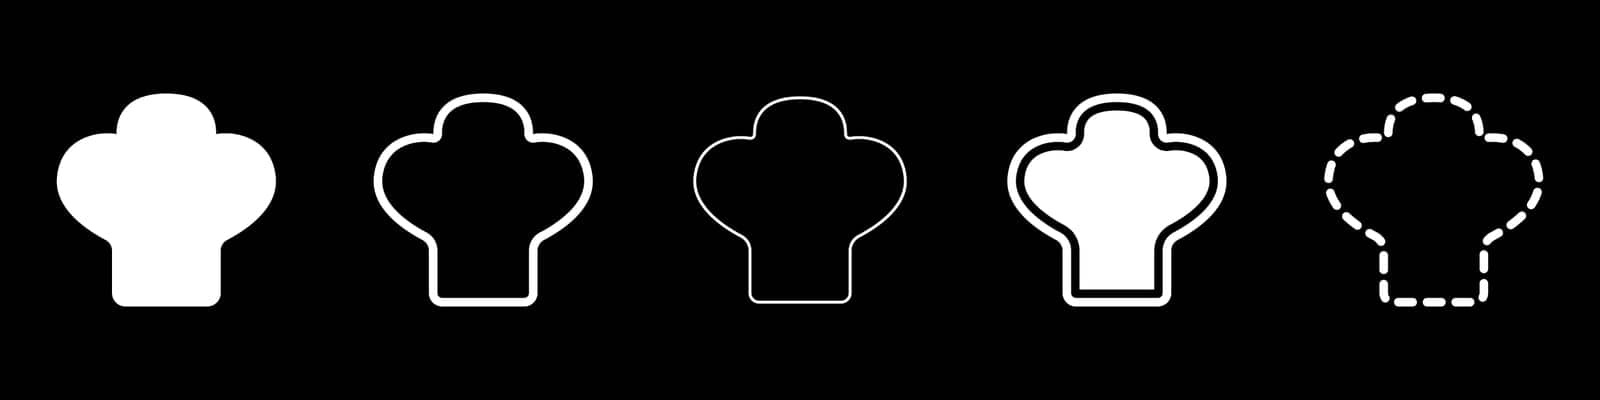 Chef cap vector. Set of chef s caps vector. Kitchen head protection icon vector. by Moreidea